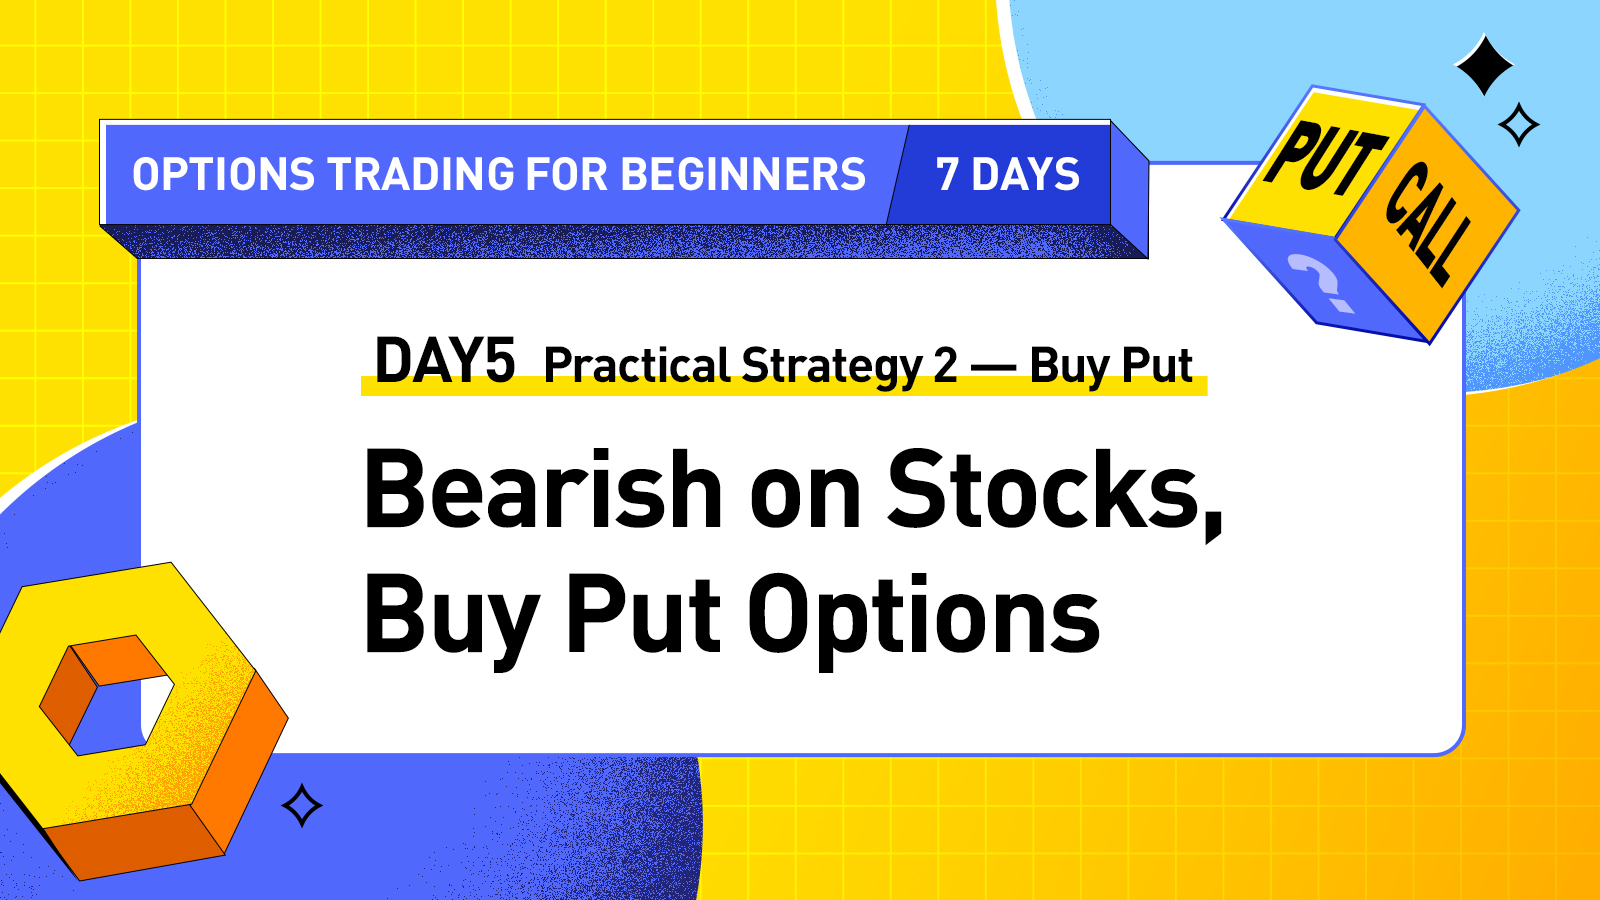 DAY5- Practical Strategy 2: Bearish on Stocks, Buy Put Options (Buy Put)